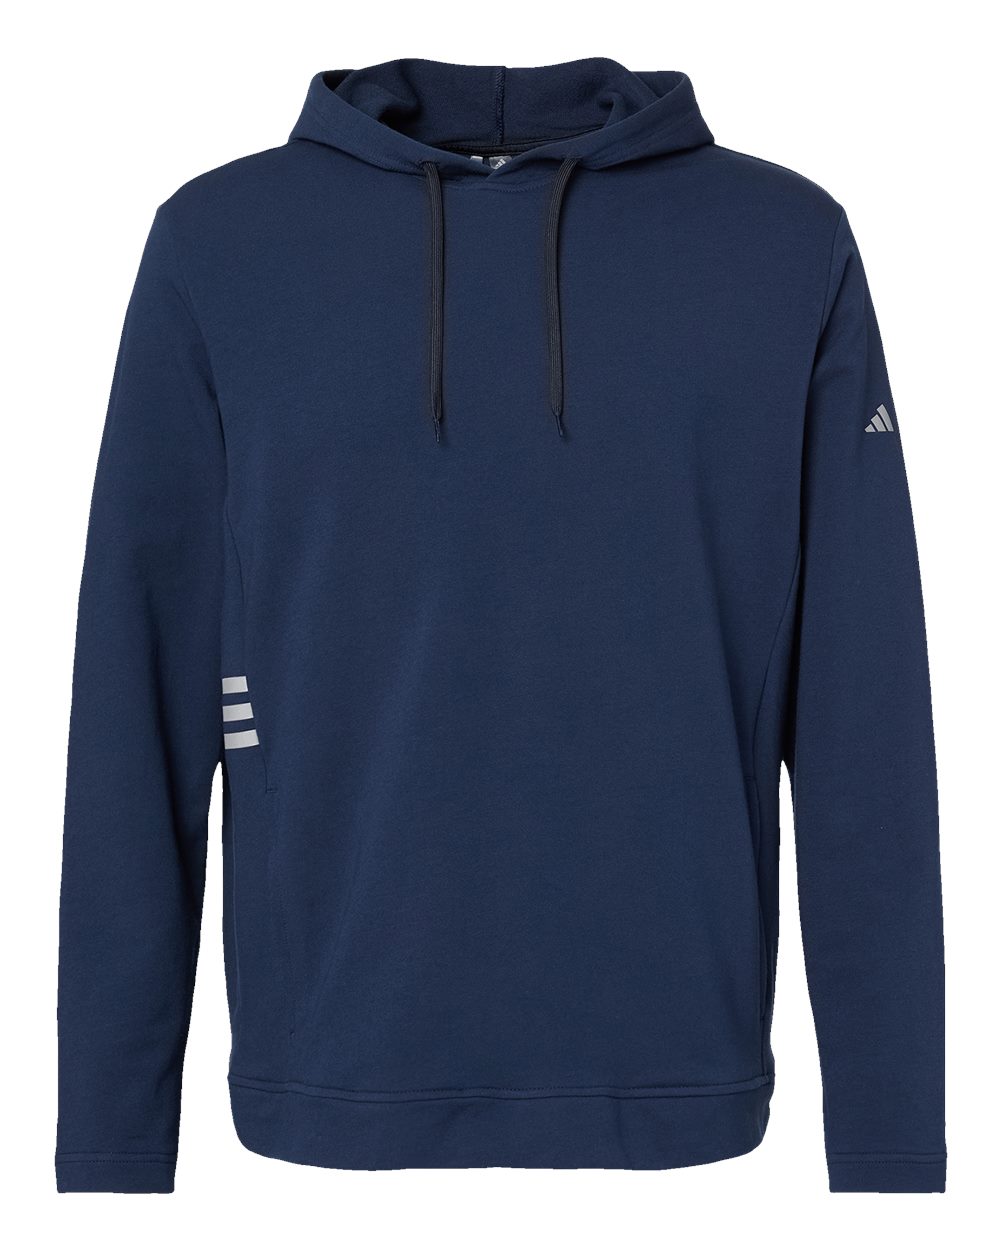 Adidas Mens Lightweight Hooded Sweatshirt A450 up to 4XL | eBay